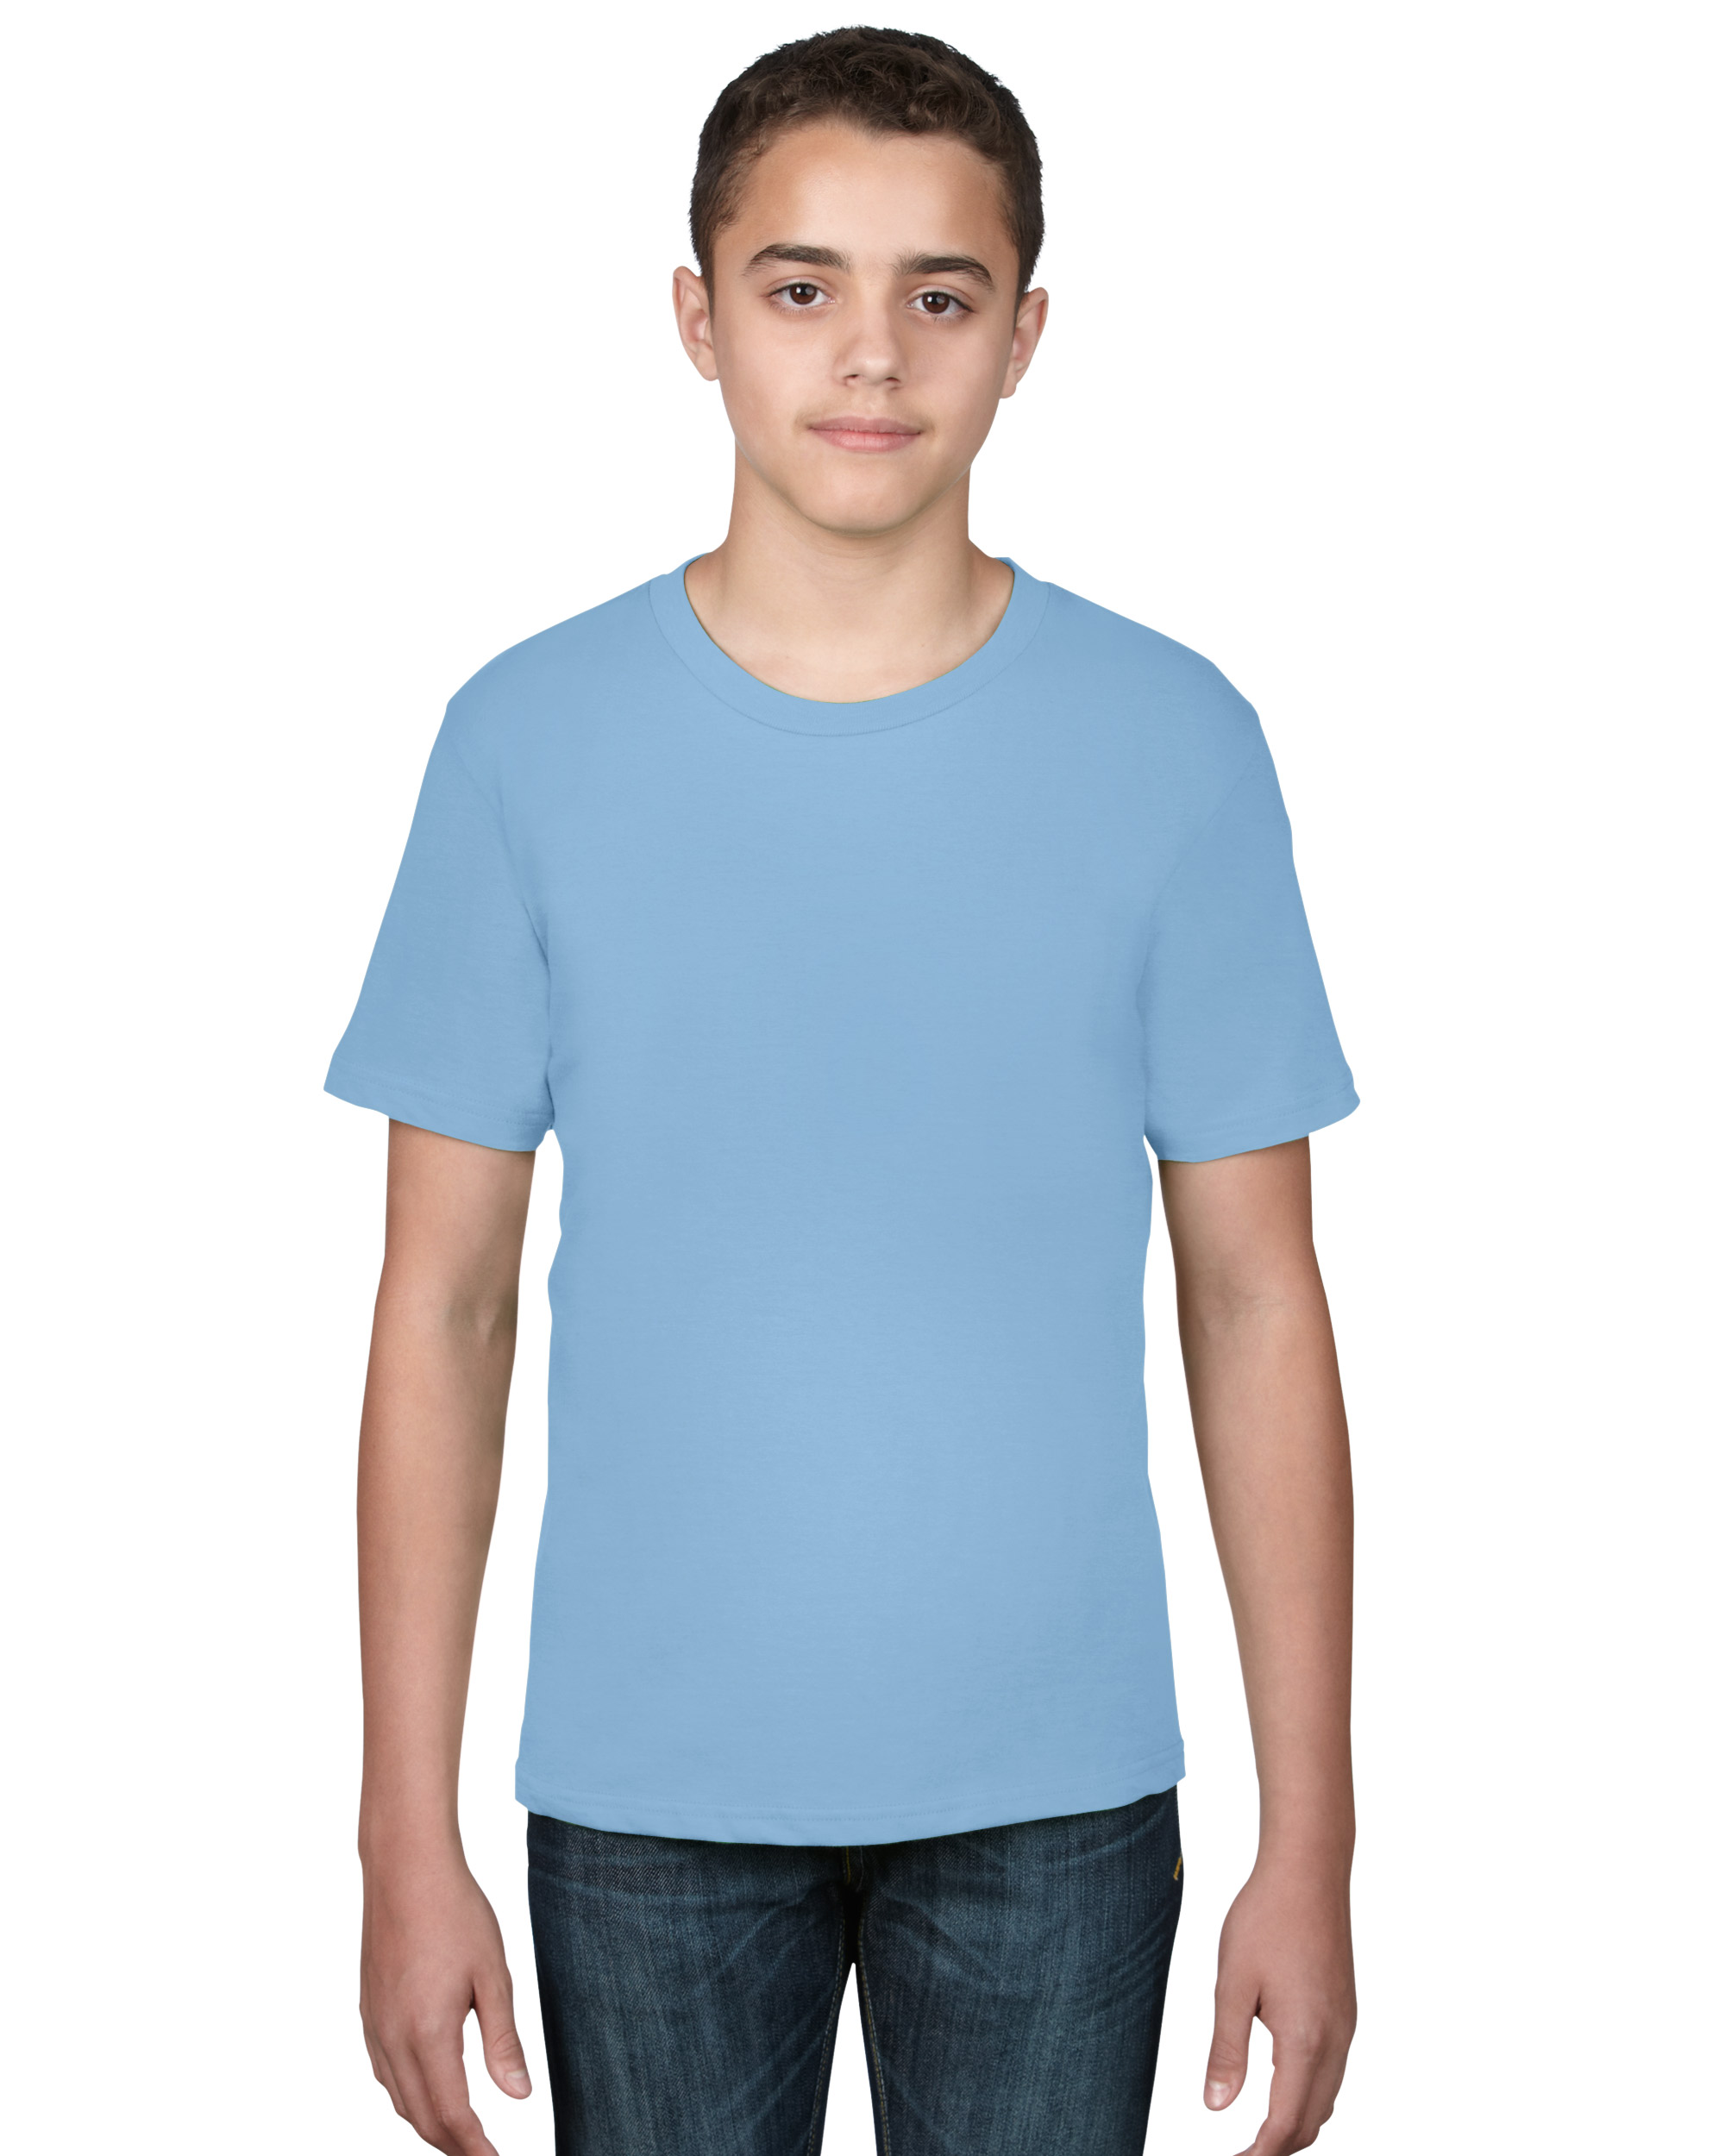 Anvil Youth Unisex Lightweight T-Shirt - Team Shirt Pros